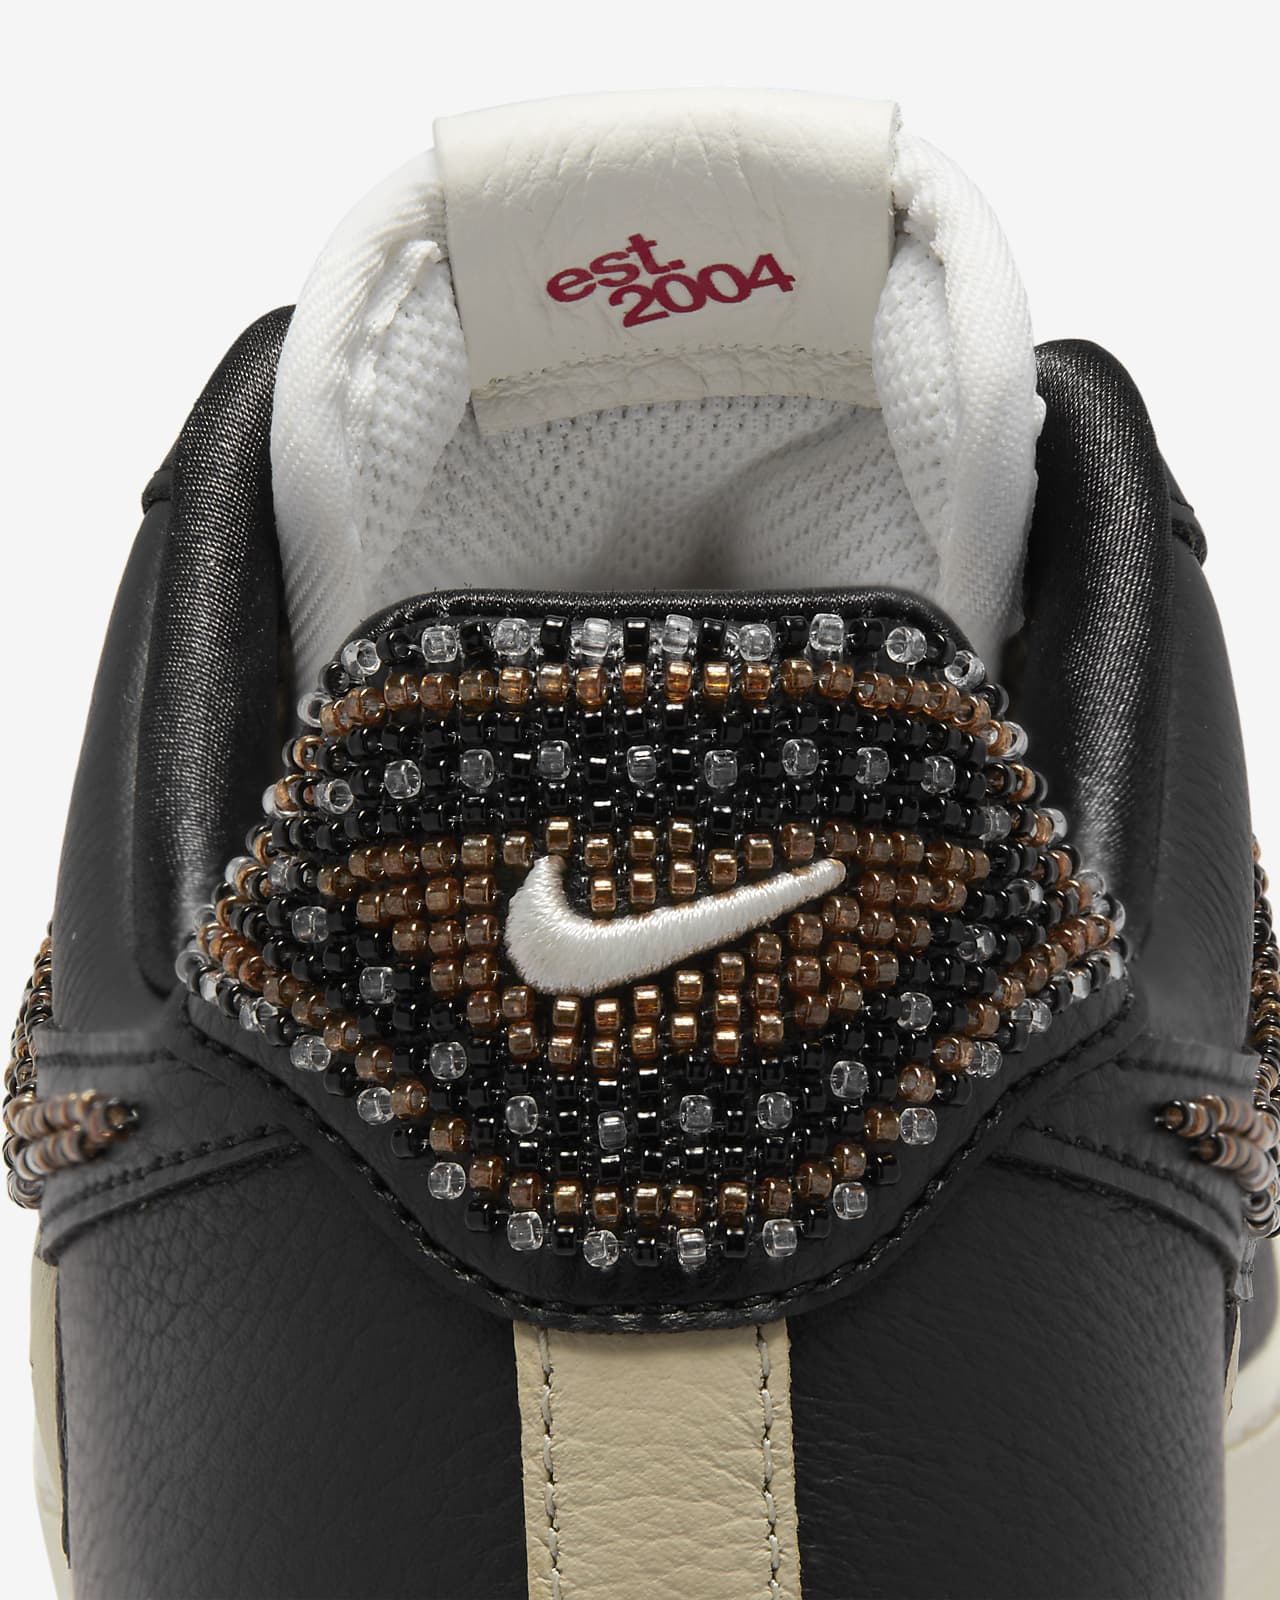 Nike Air Force 1 Low x Premium Goods Women's Shoes